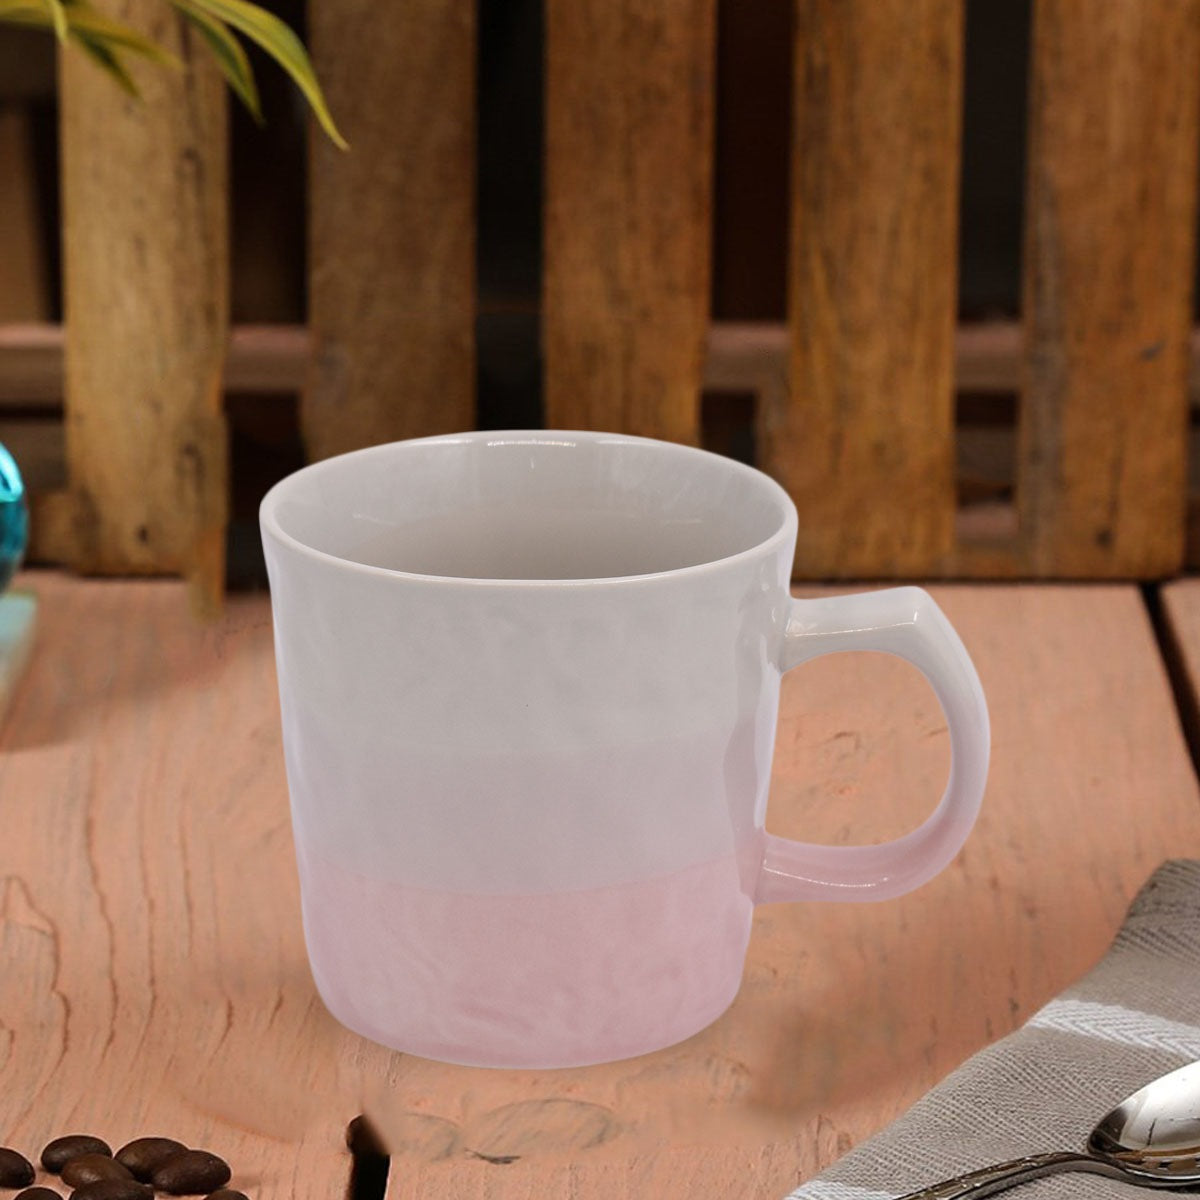 Kookee Ceramic Coffee or Tea Mug with Handle for Office, Home or Gifting - 250ml (1394-1-C)